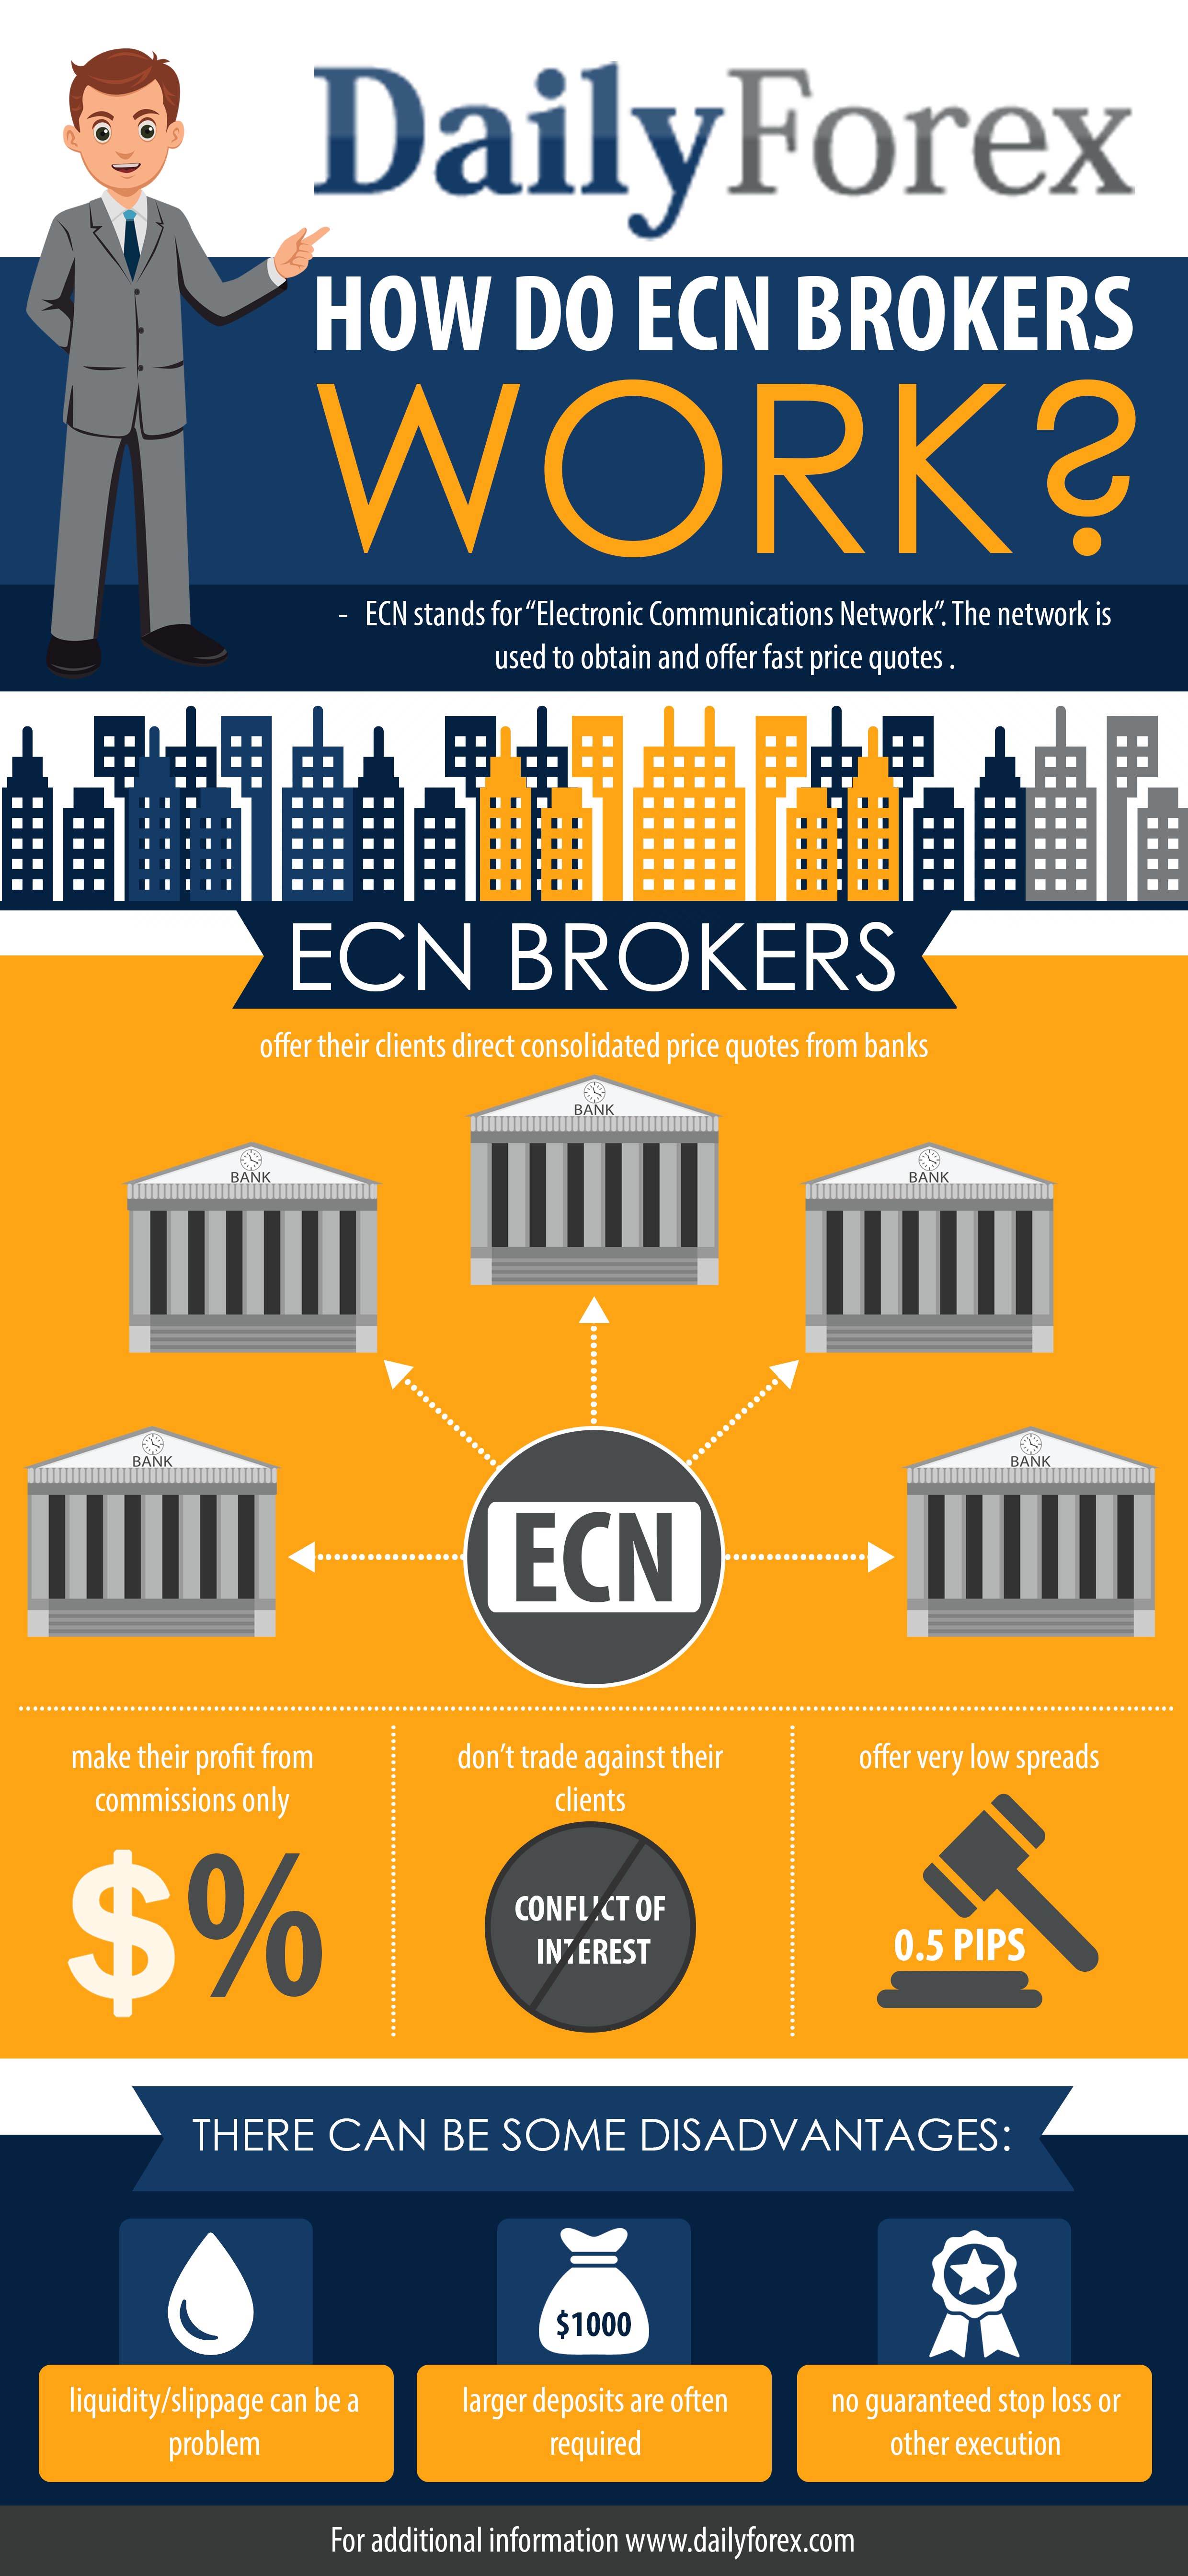 Real ecn forex brokers